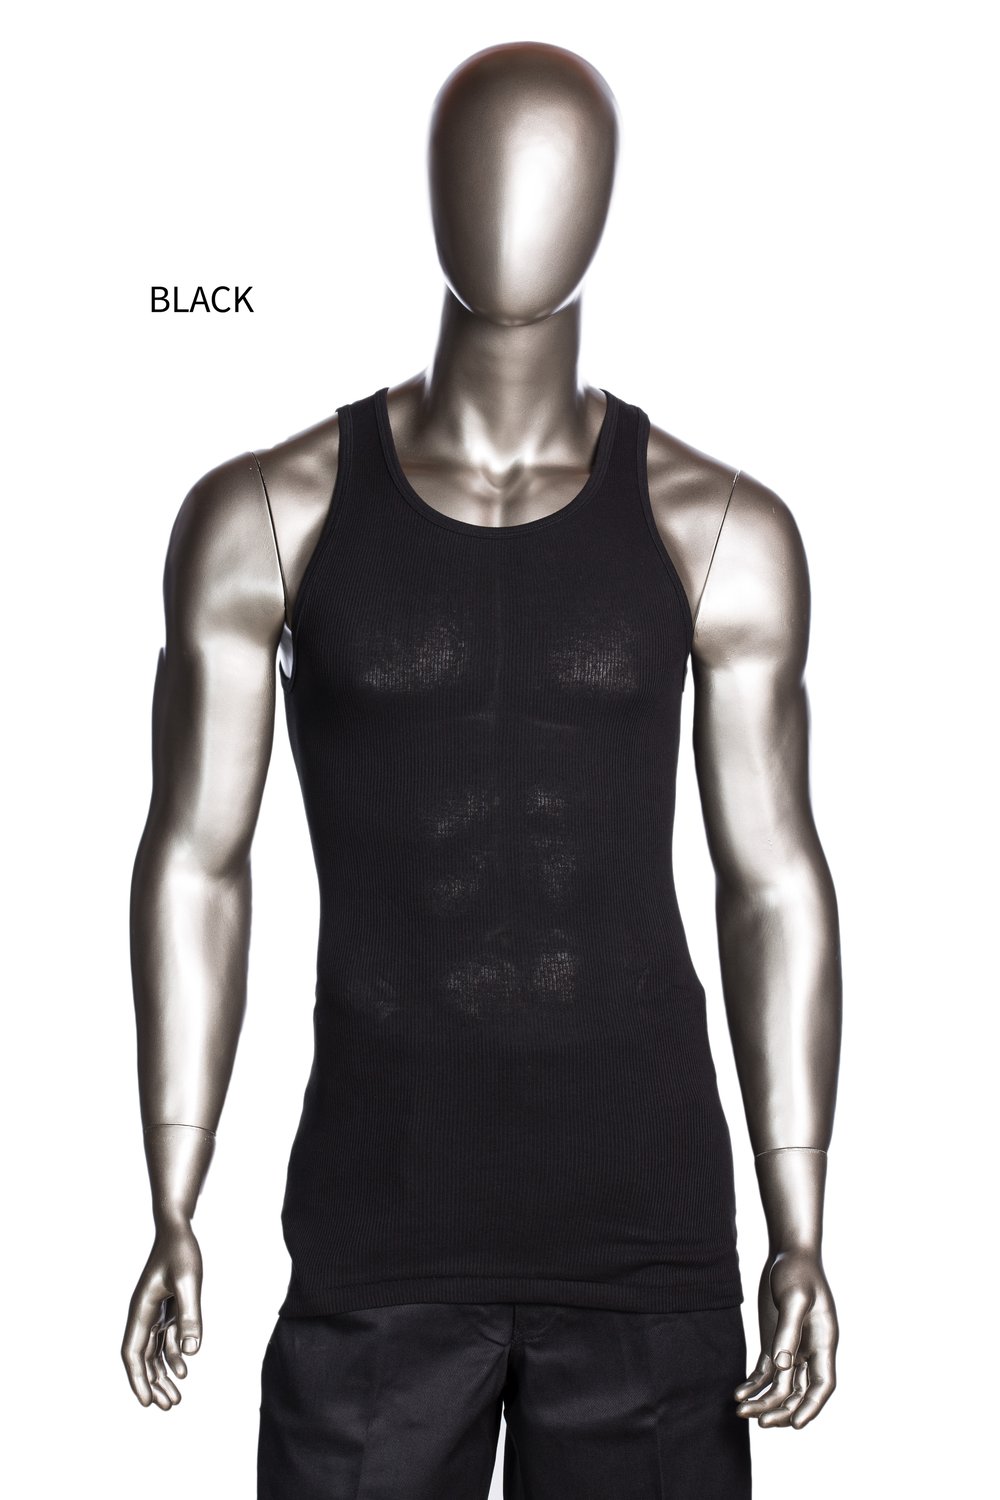 TANKTOPS Athletic Tank Top Black - Clothing - Atticus Clothing